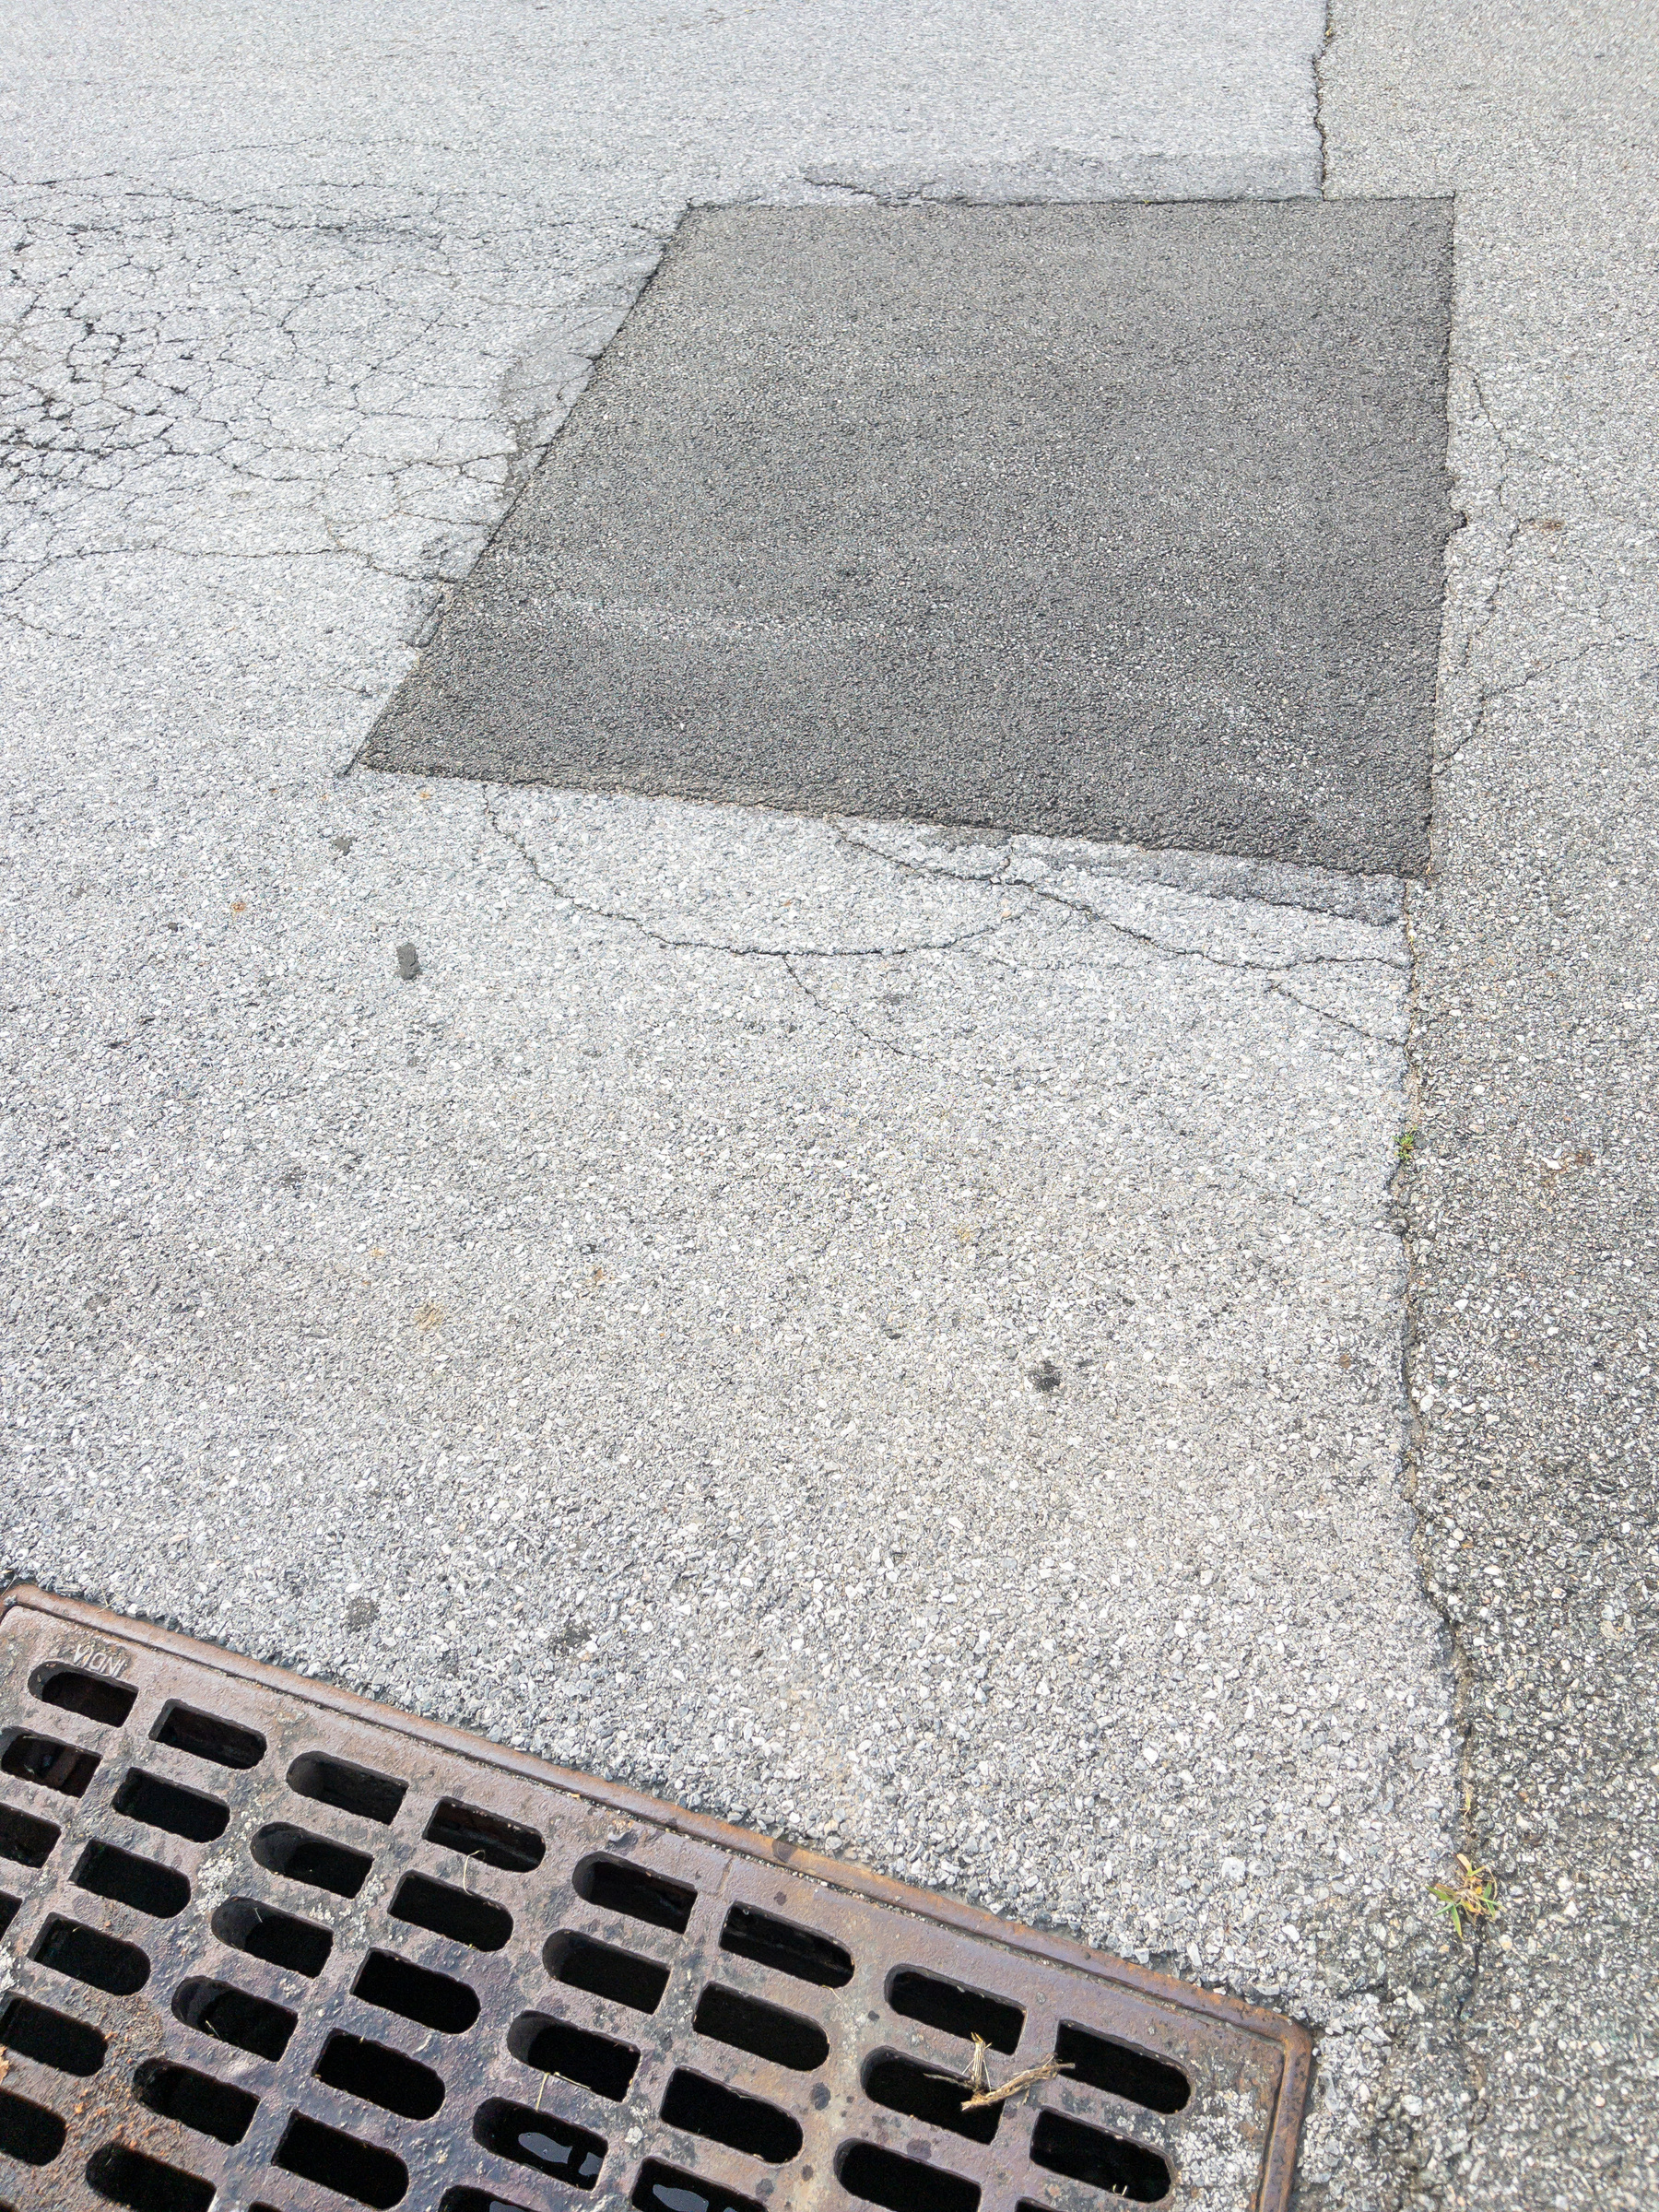 Rectangular patch in asphalt street surface. Drainage basin steel plate grid.